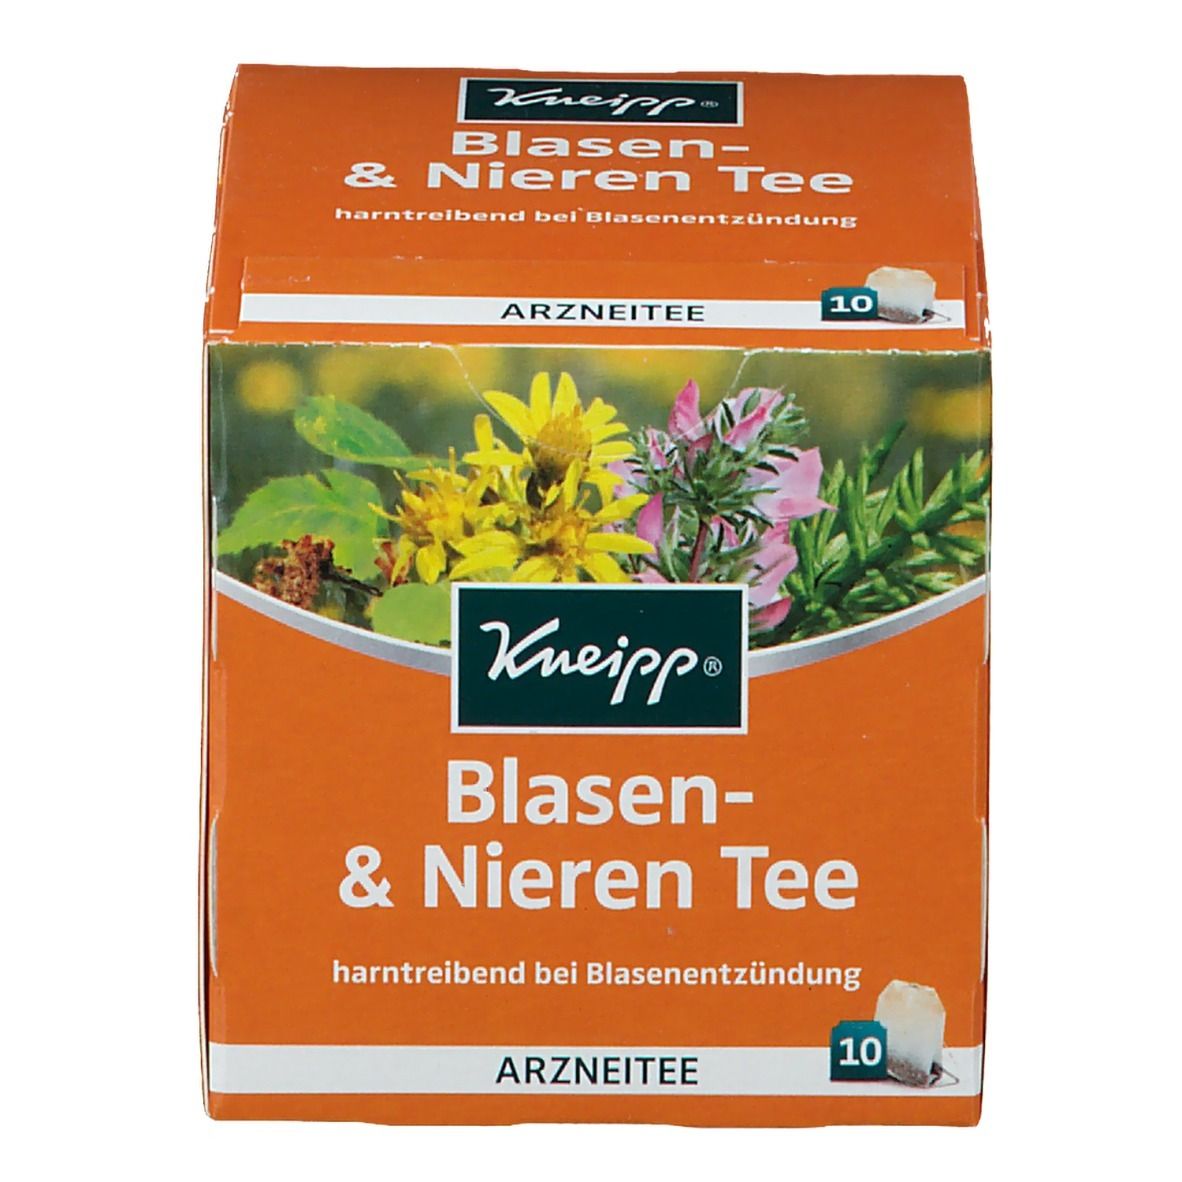 Kneipp® Blasen- & Nieren Tee